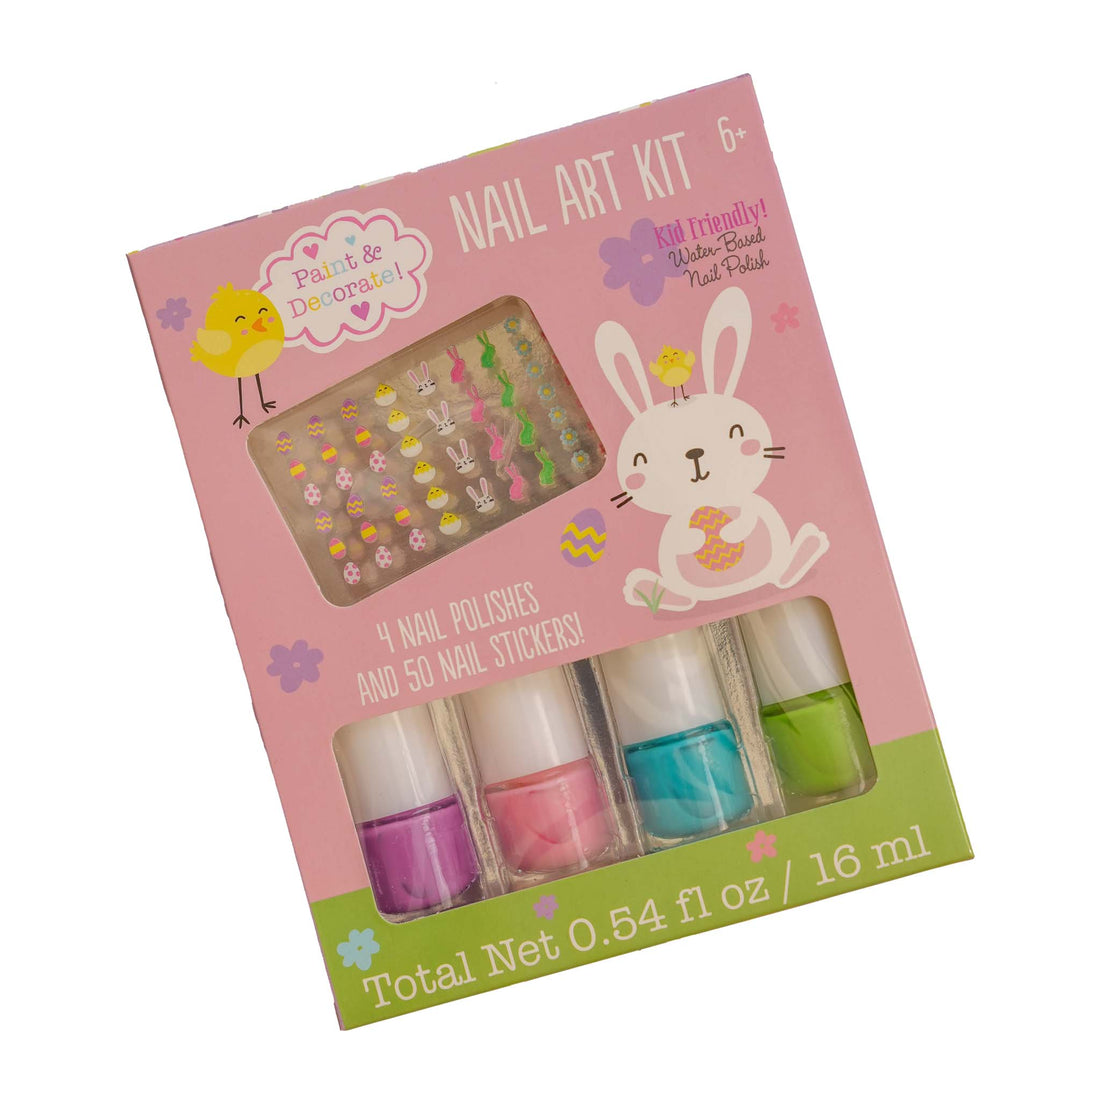 Nail art kit for girls ages 6+